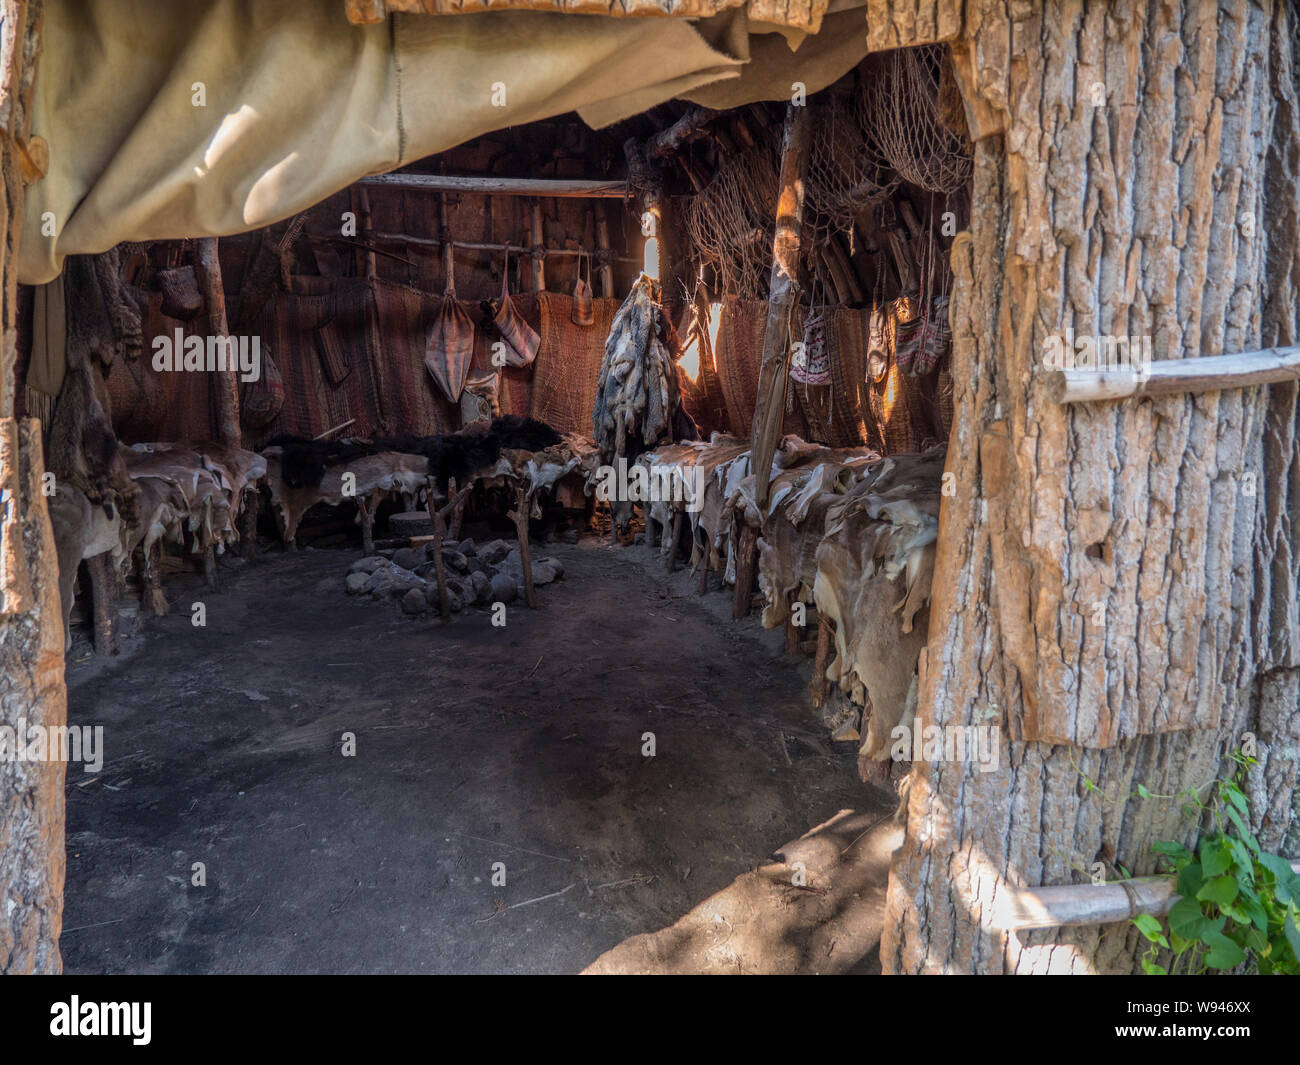 Inside Wampanoag home called a nush wetu containing animal skins. Stock Photo